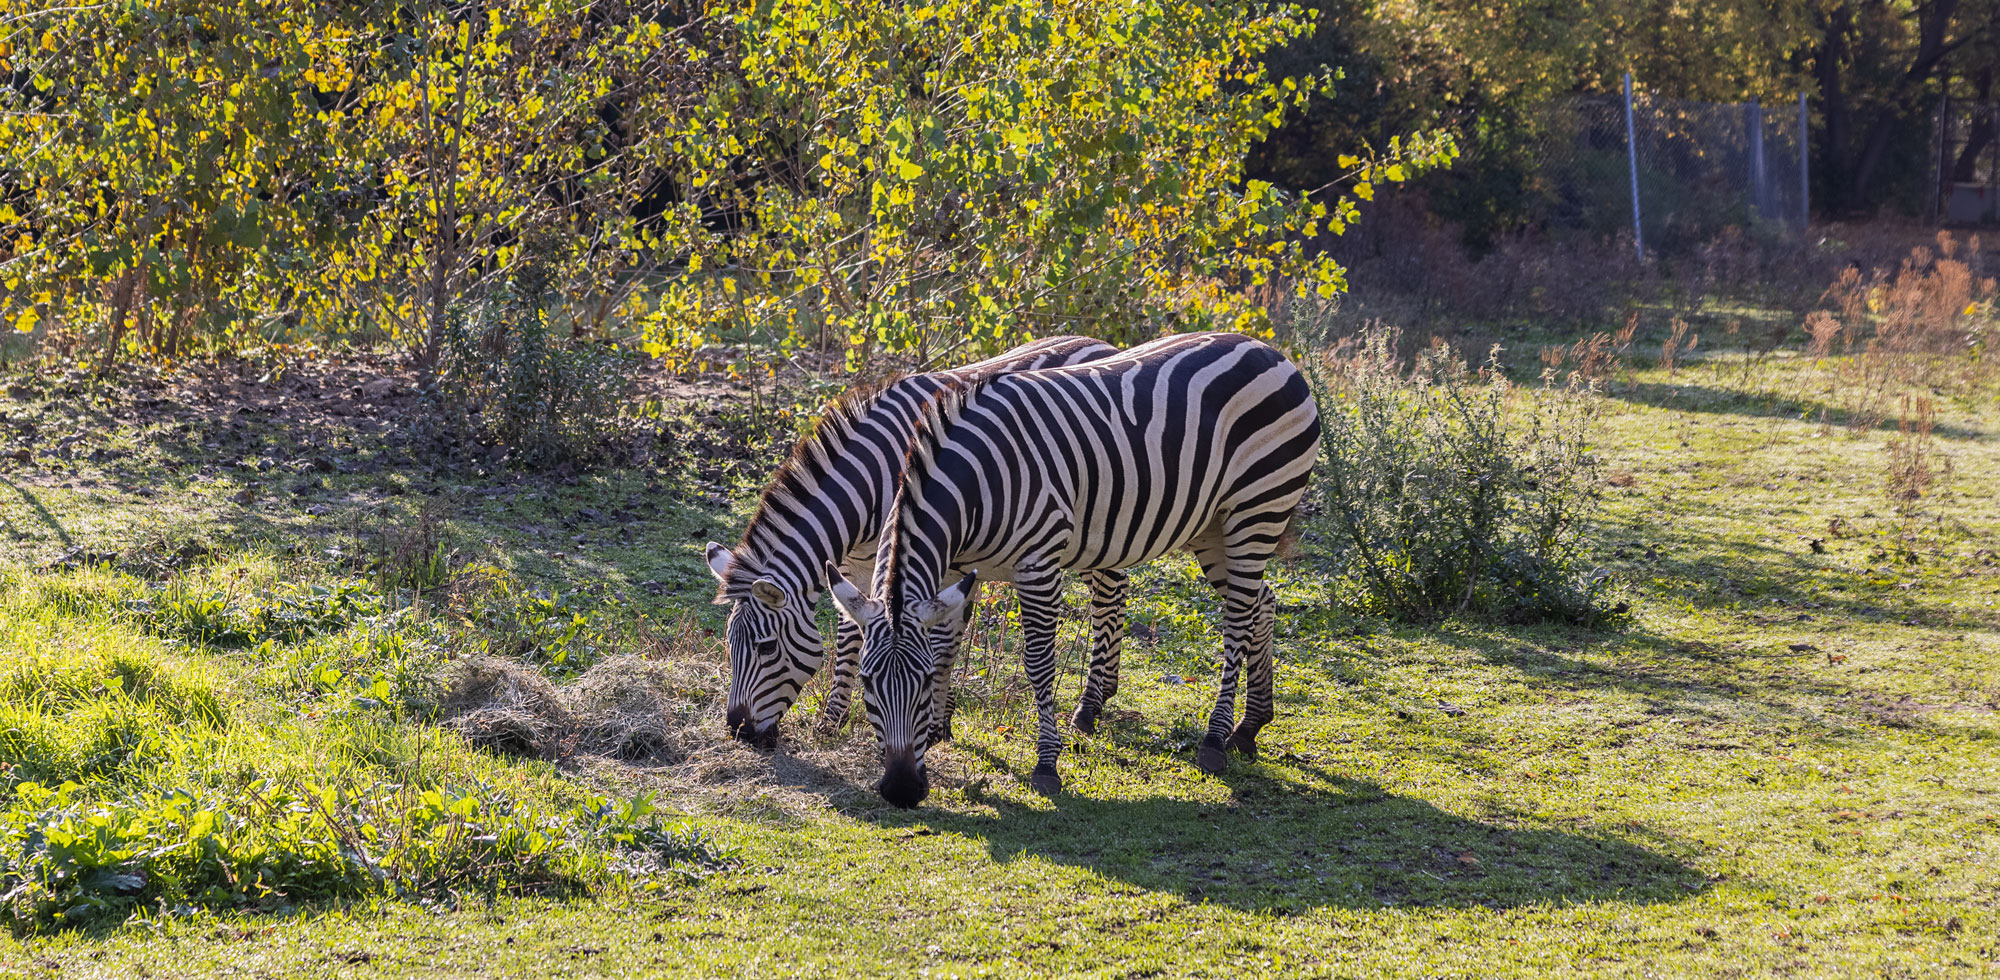 Zebras at Pine Grove Zoo